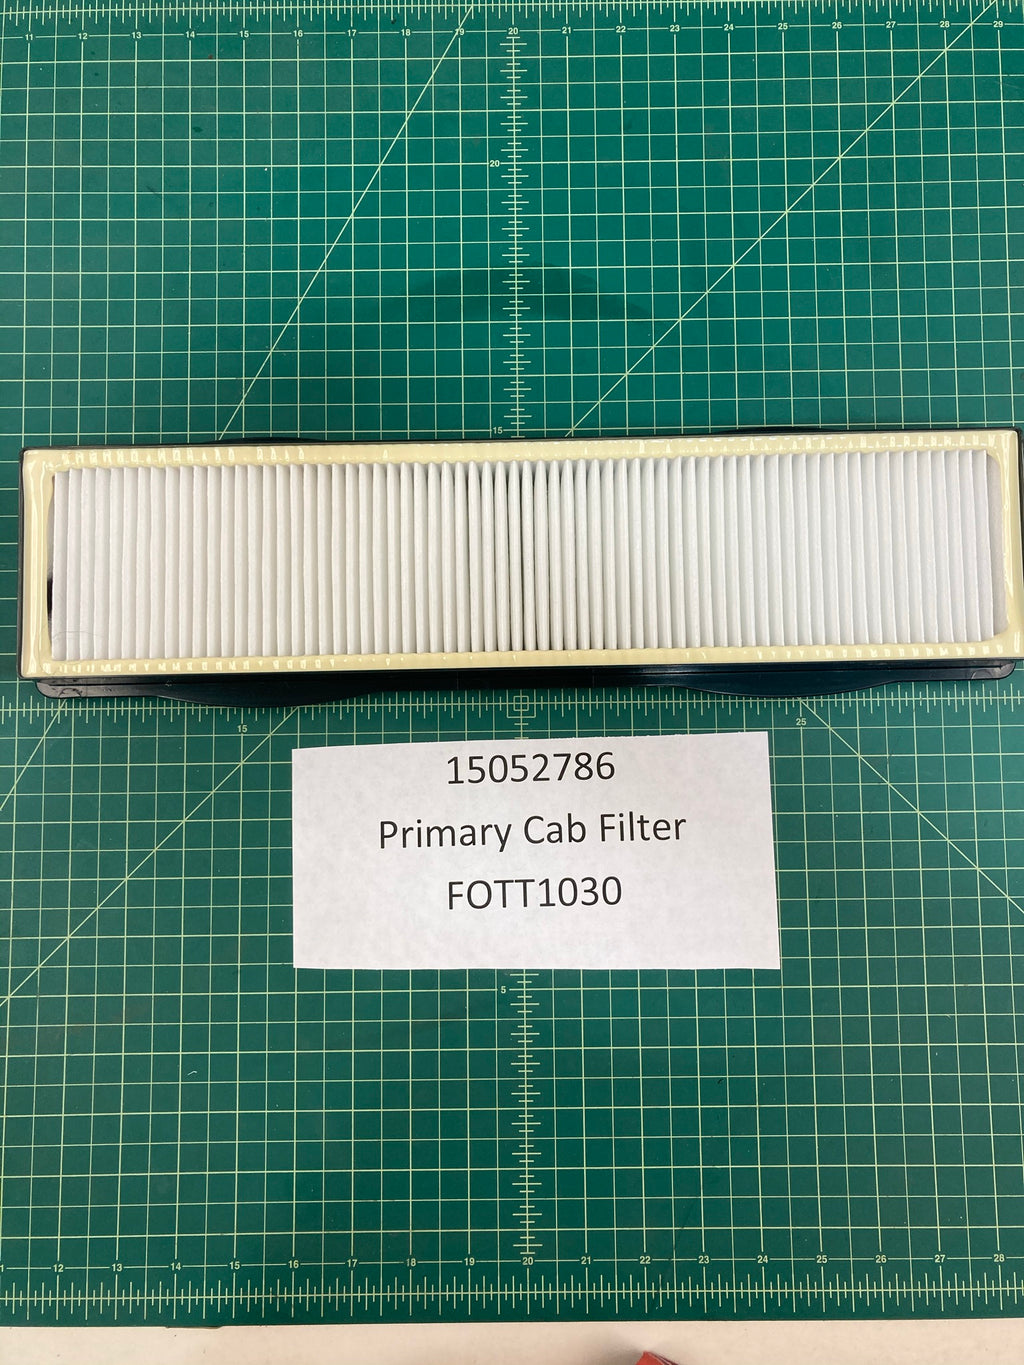 Volvo-Primary Cab Filter